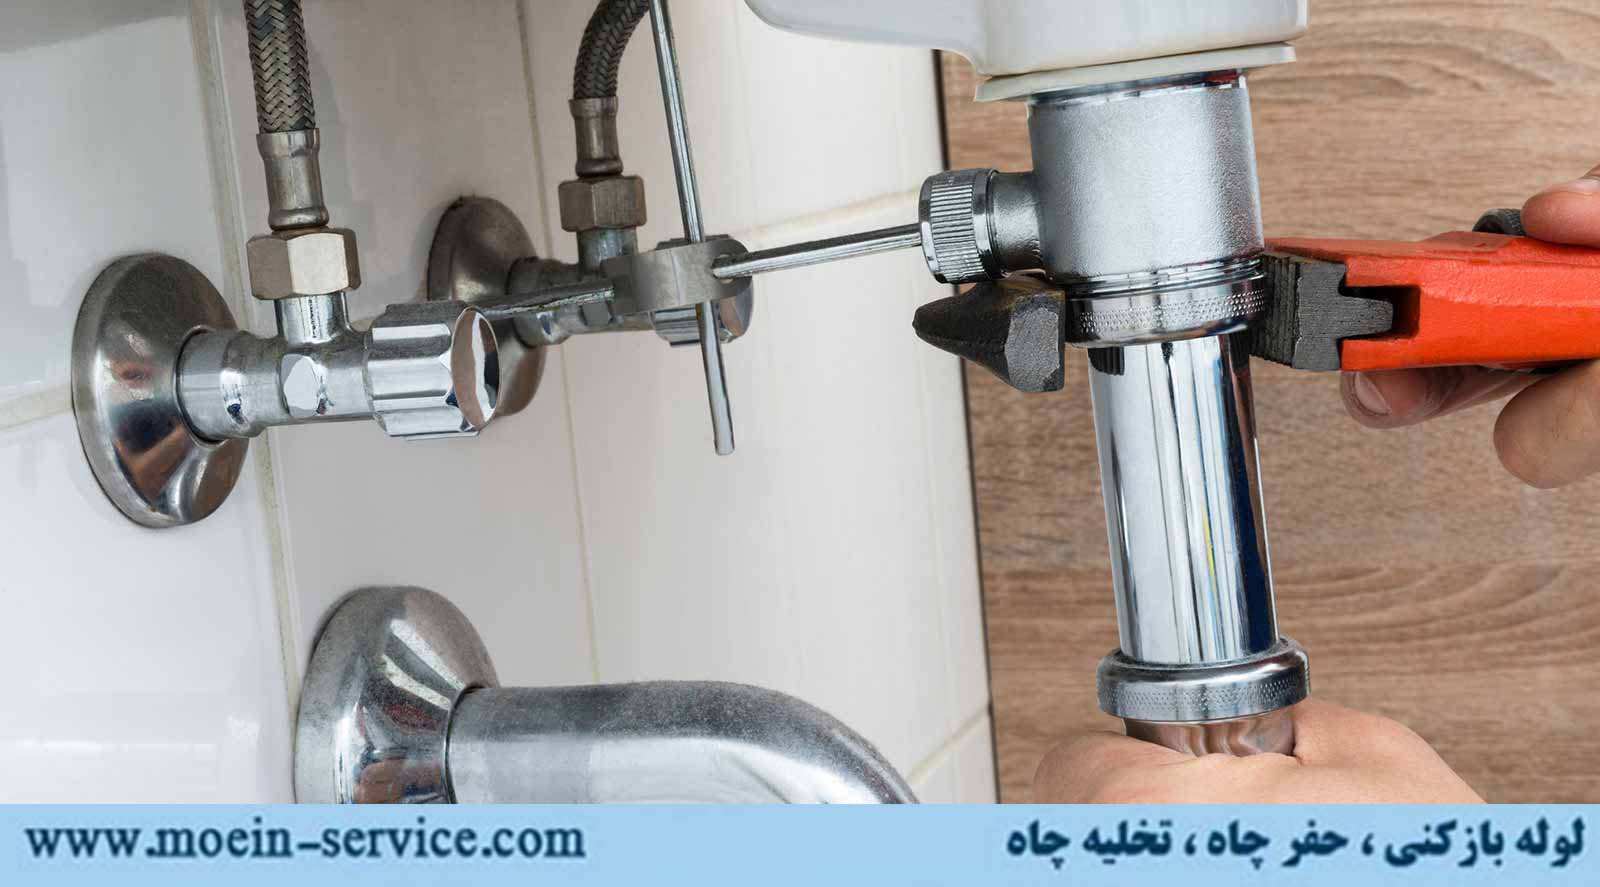 لوله بازکنی لوله ظرفشویی - شرکت معین سرویس